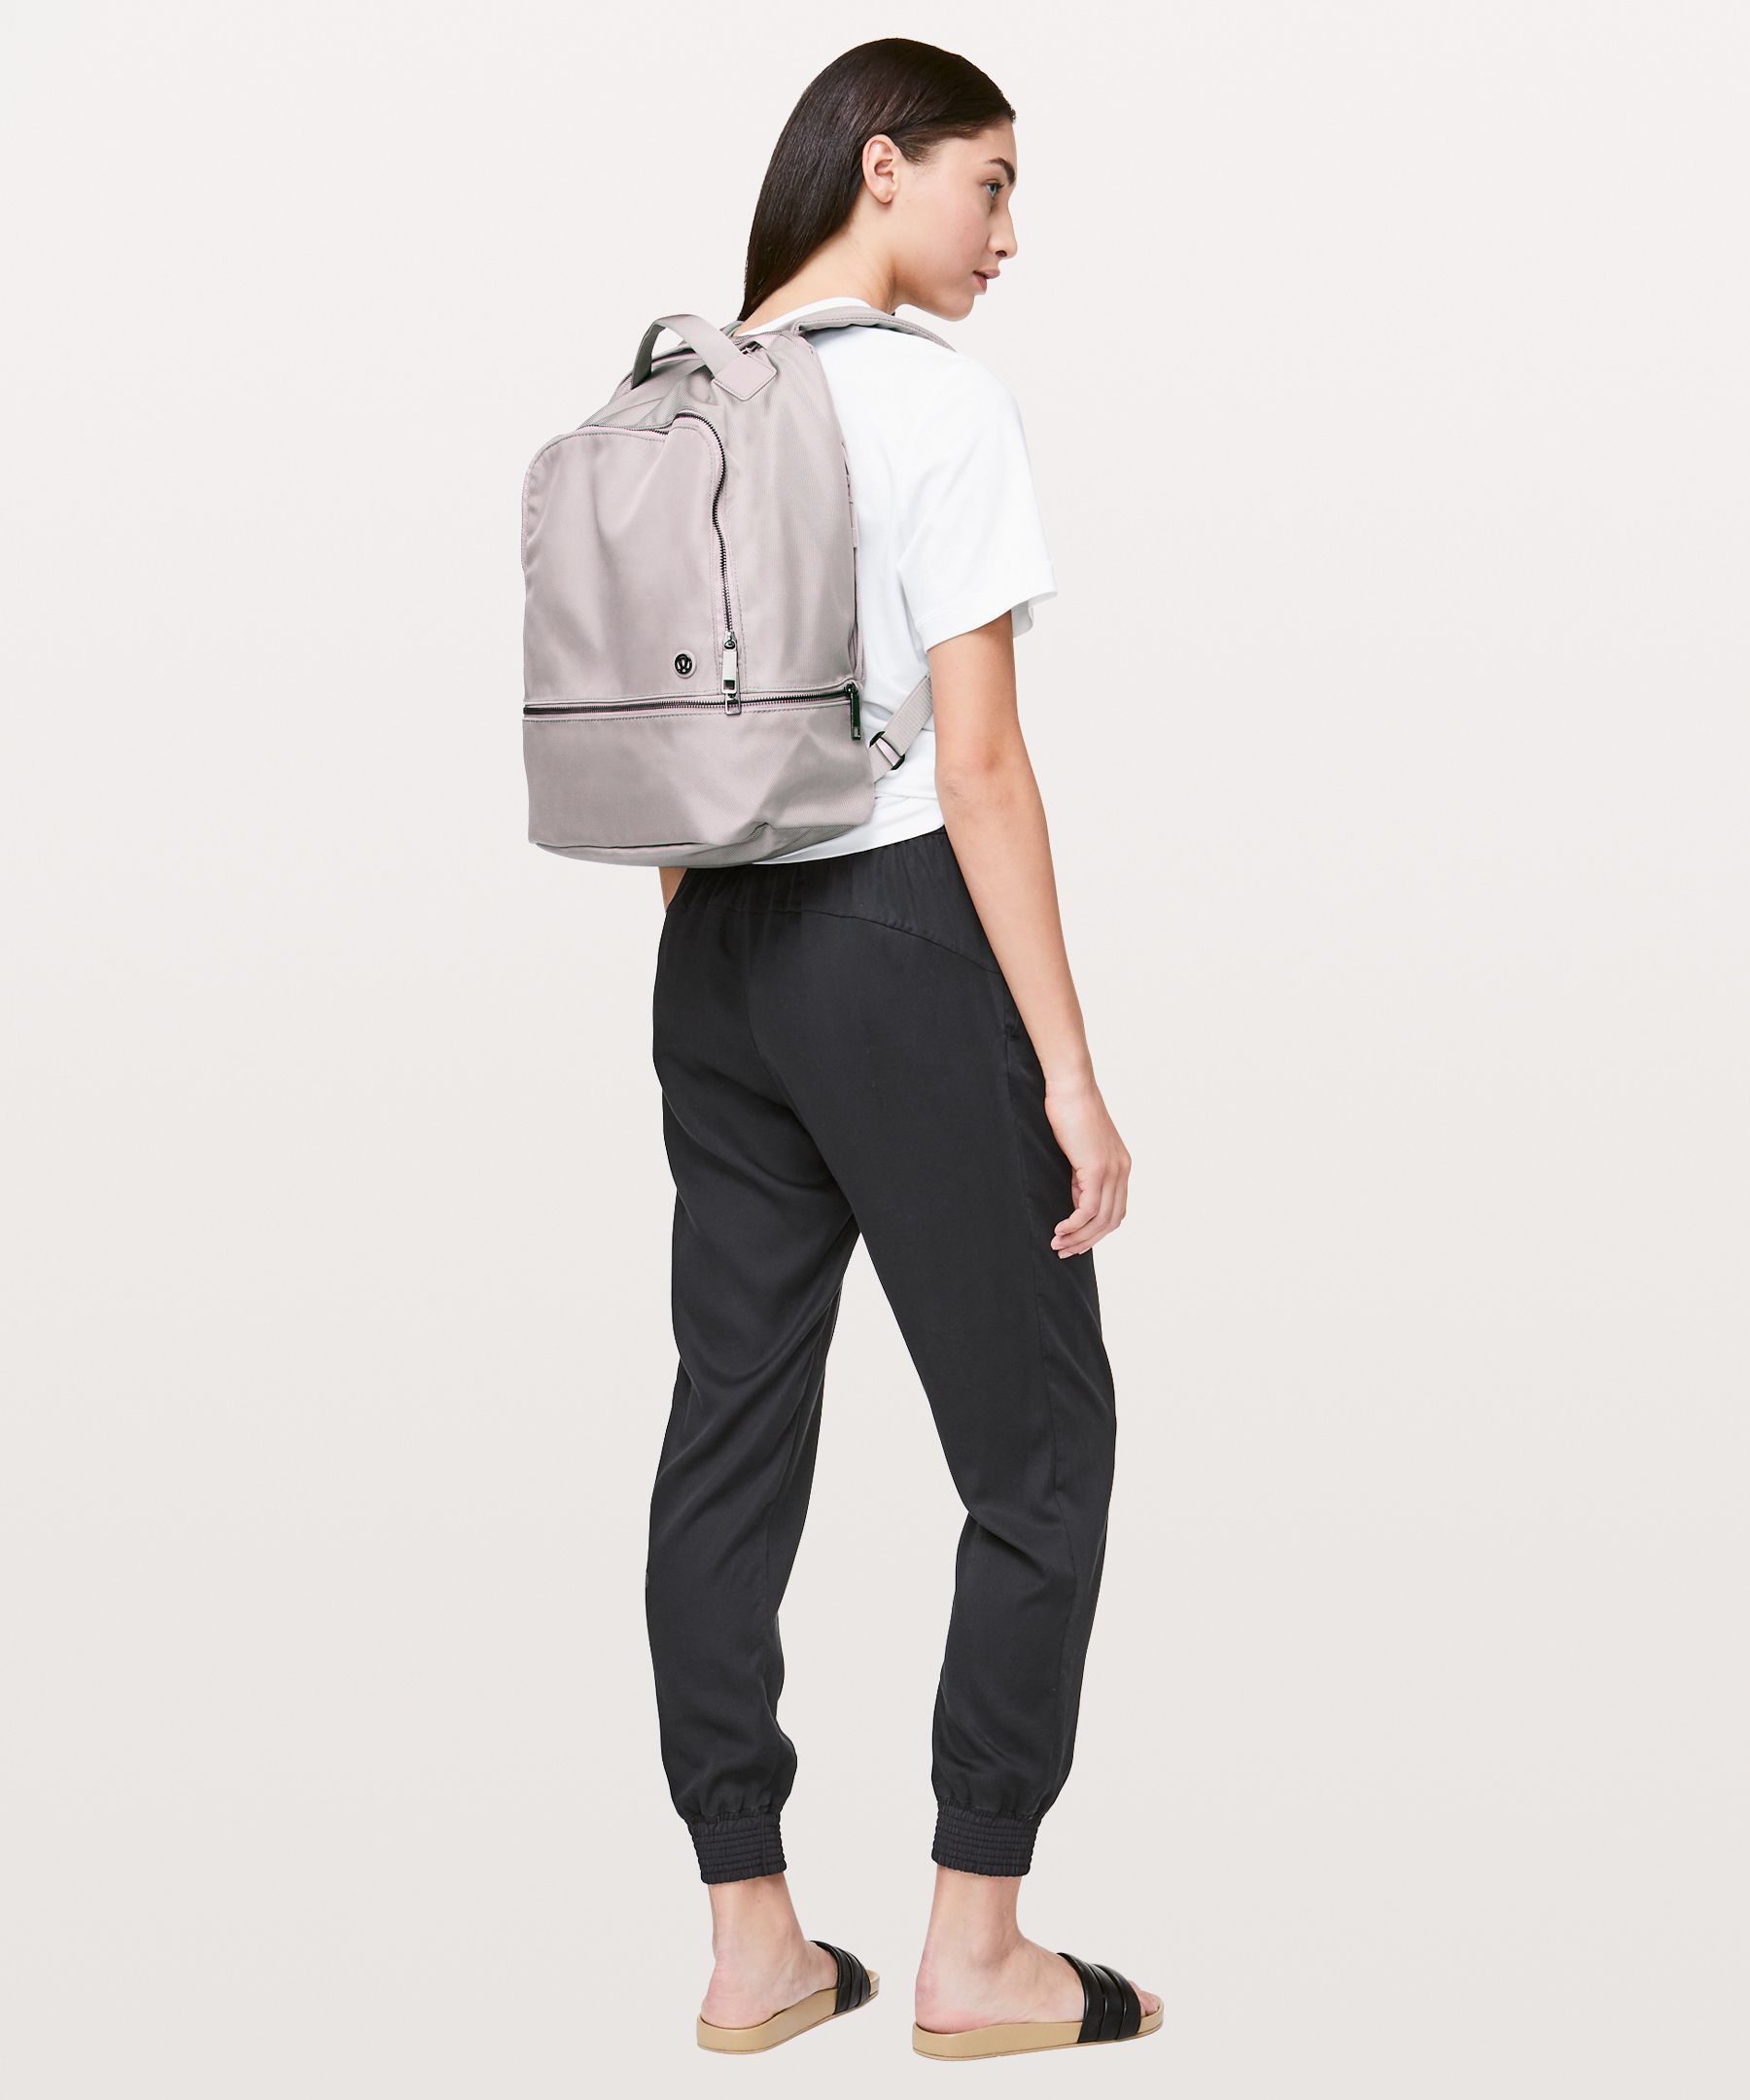 City Adventurer Backpack 20L | Women's Bags,Purses,Wallets 